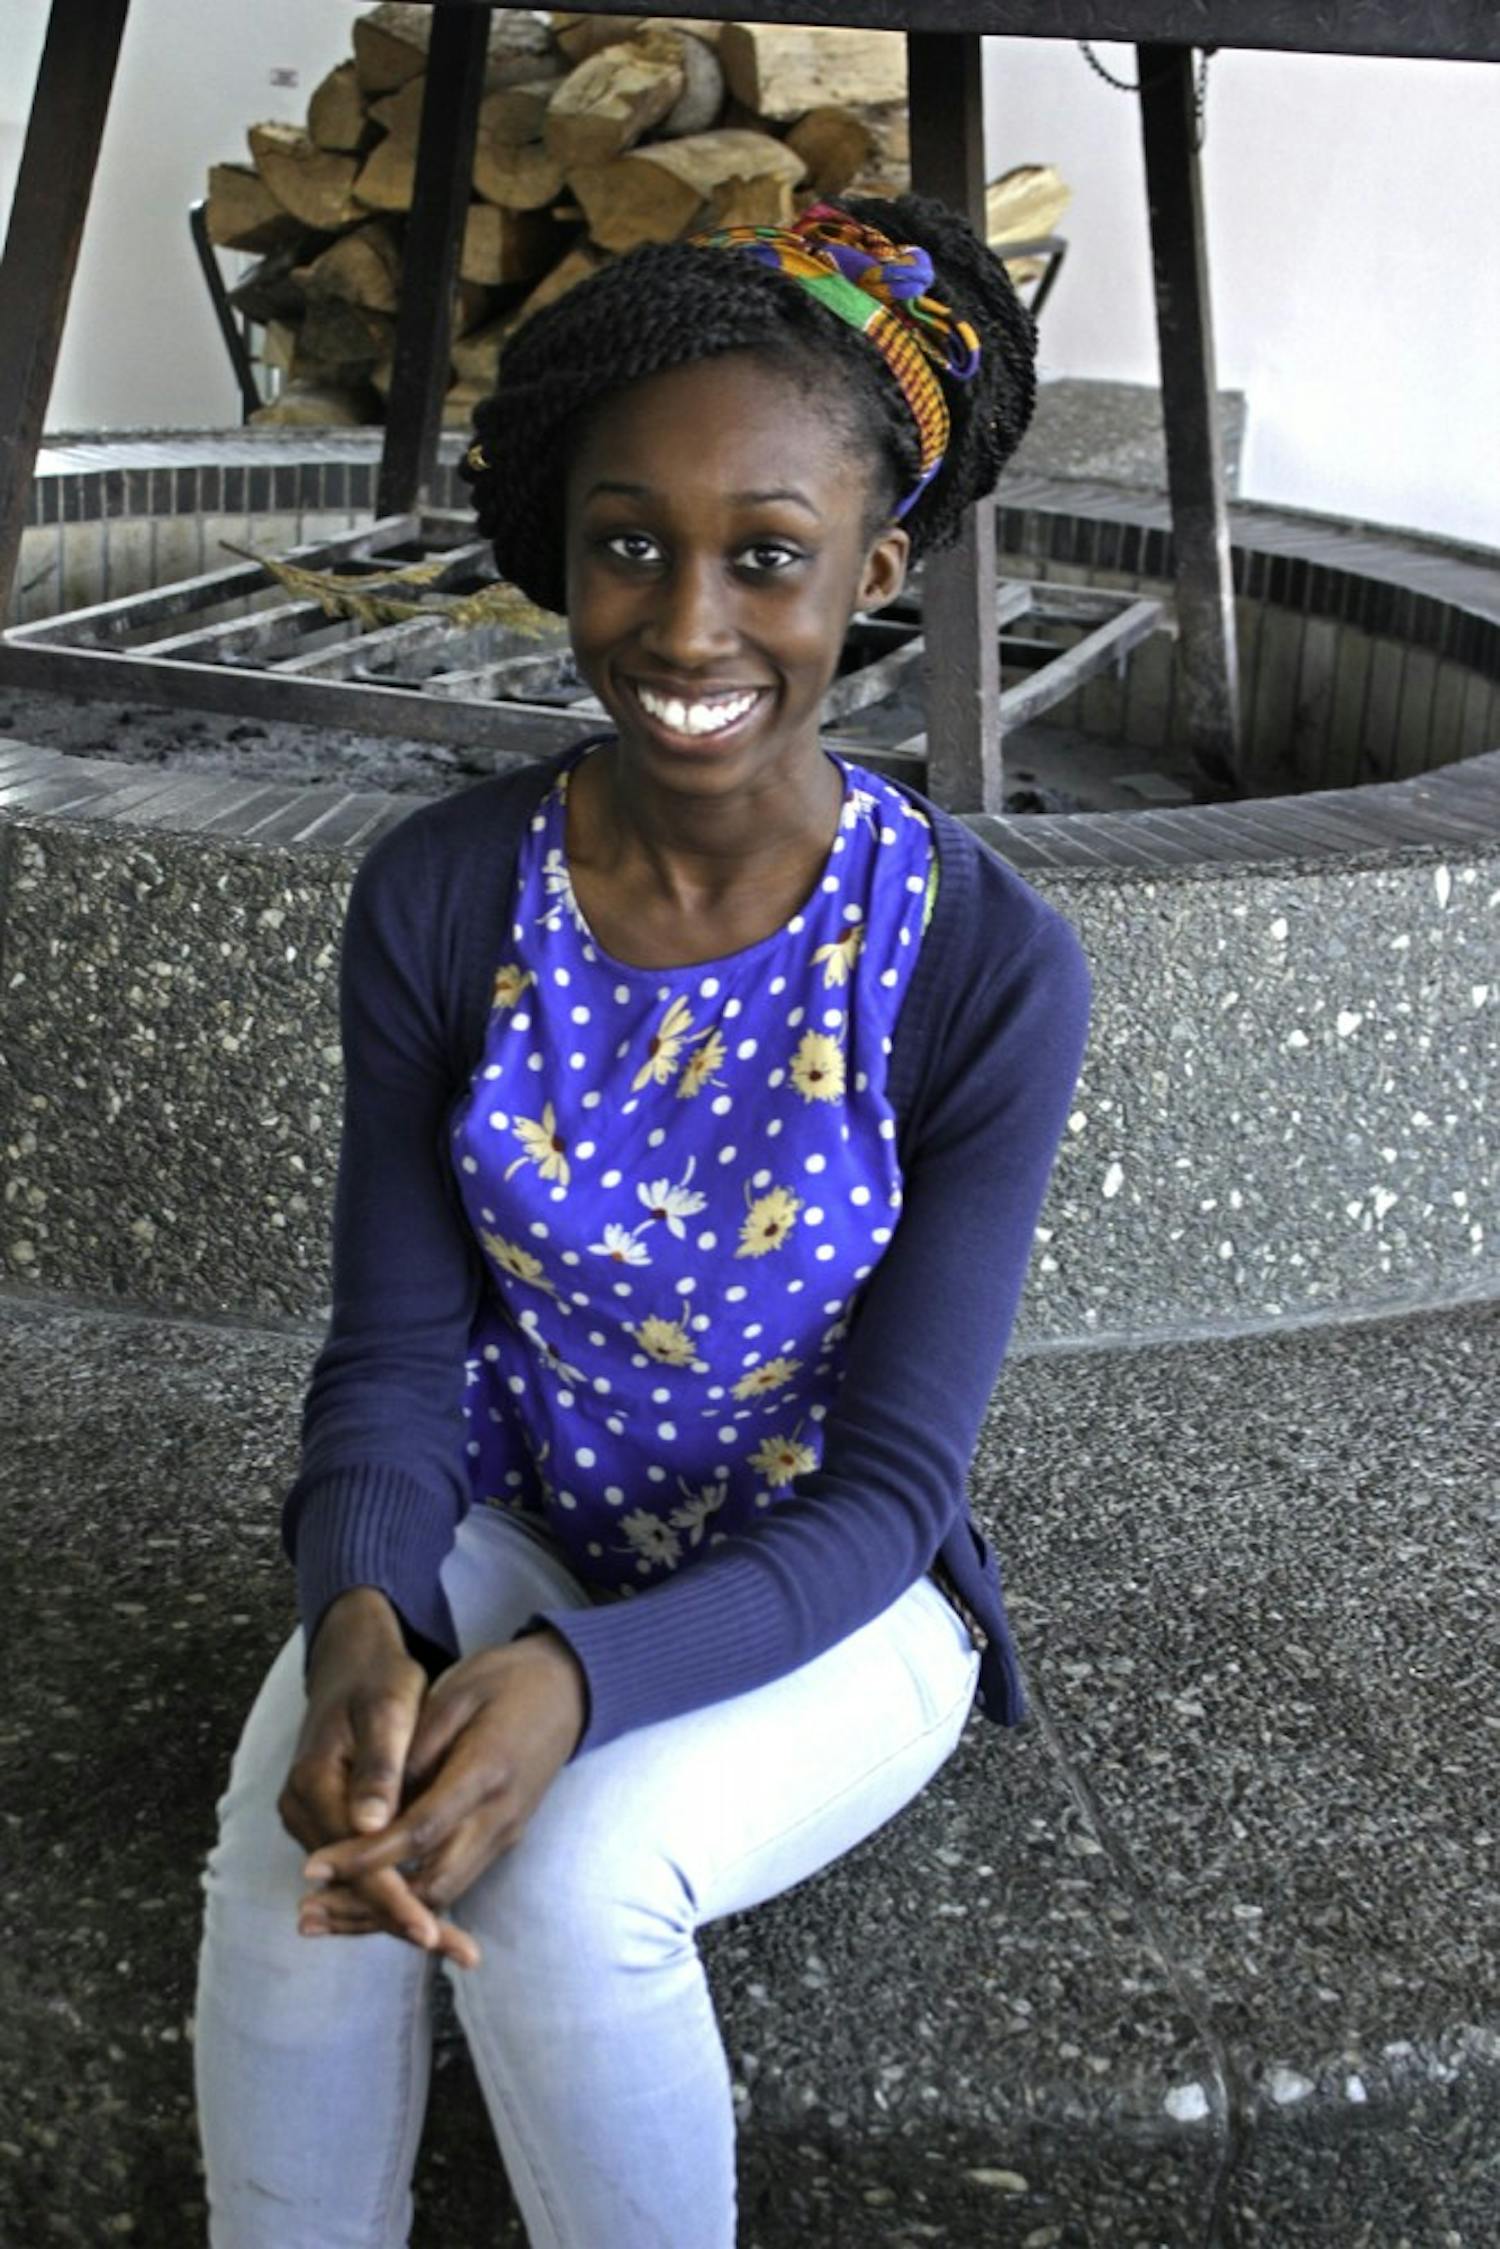 Nana Adjeiwaa-Manu ’16 said that music has helped her explore her identity.